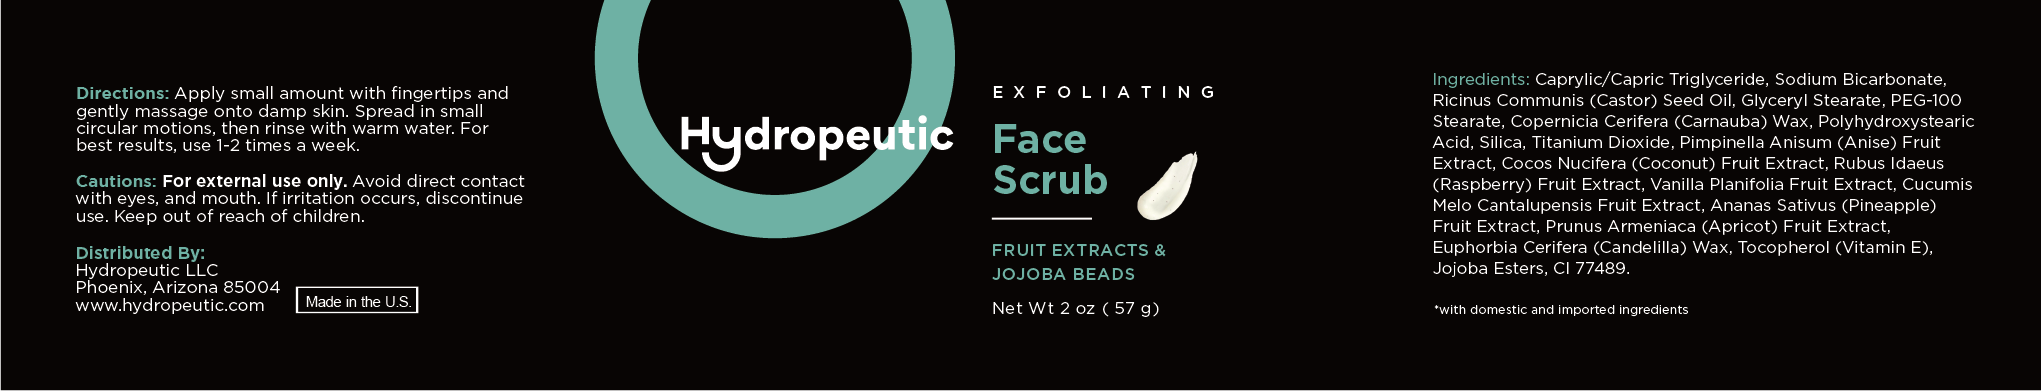 Exfoliating Face Scrub